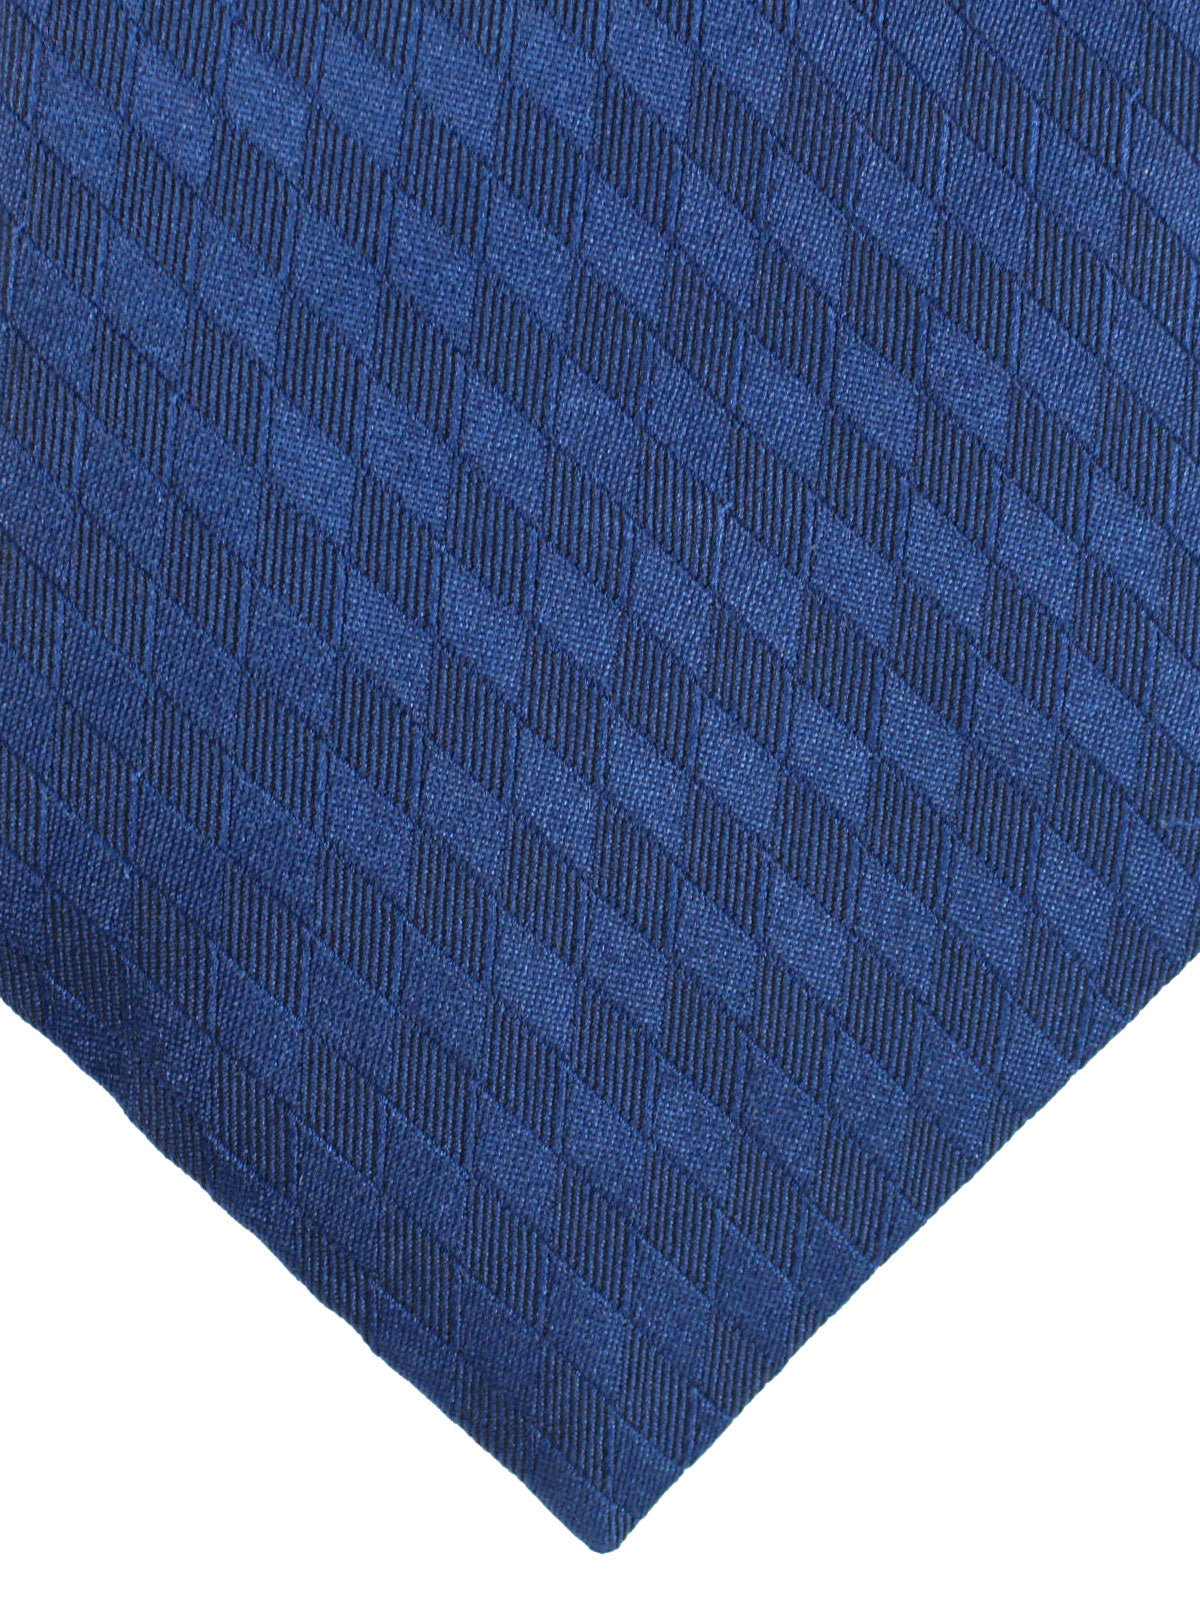 Zilli Extra Long Tie Dark Blue Geometric Design